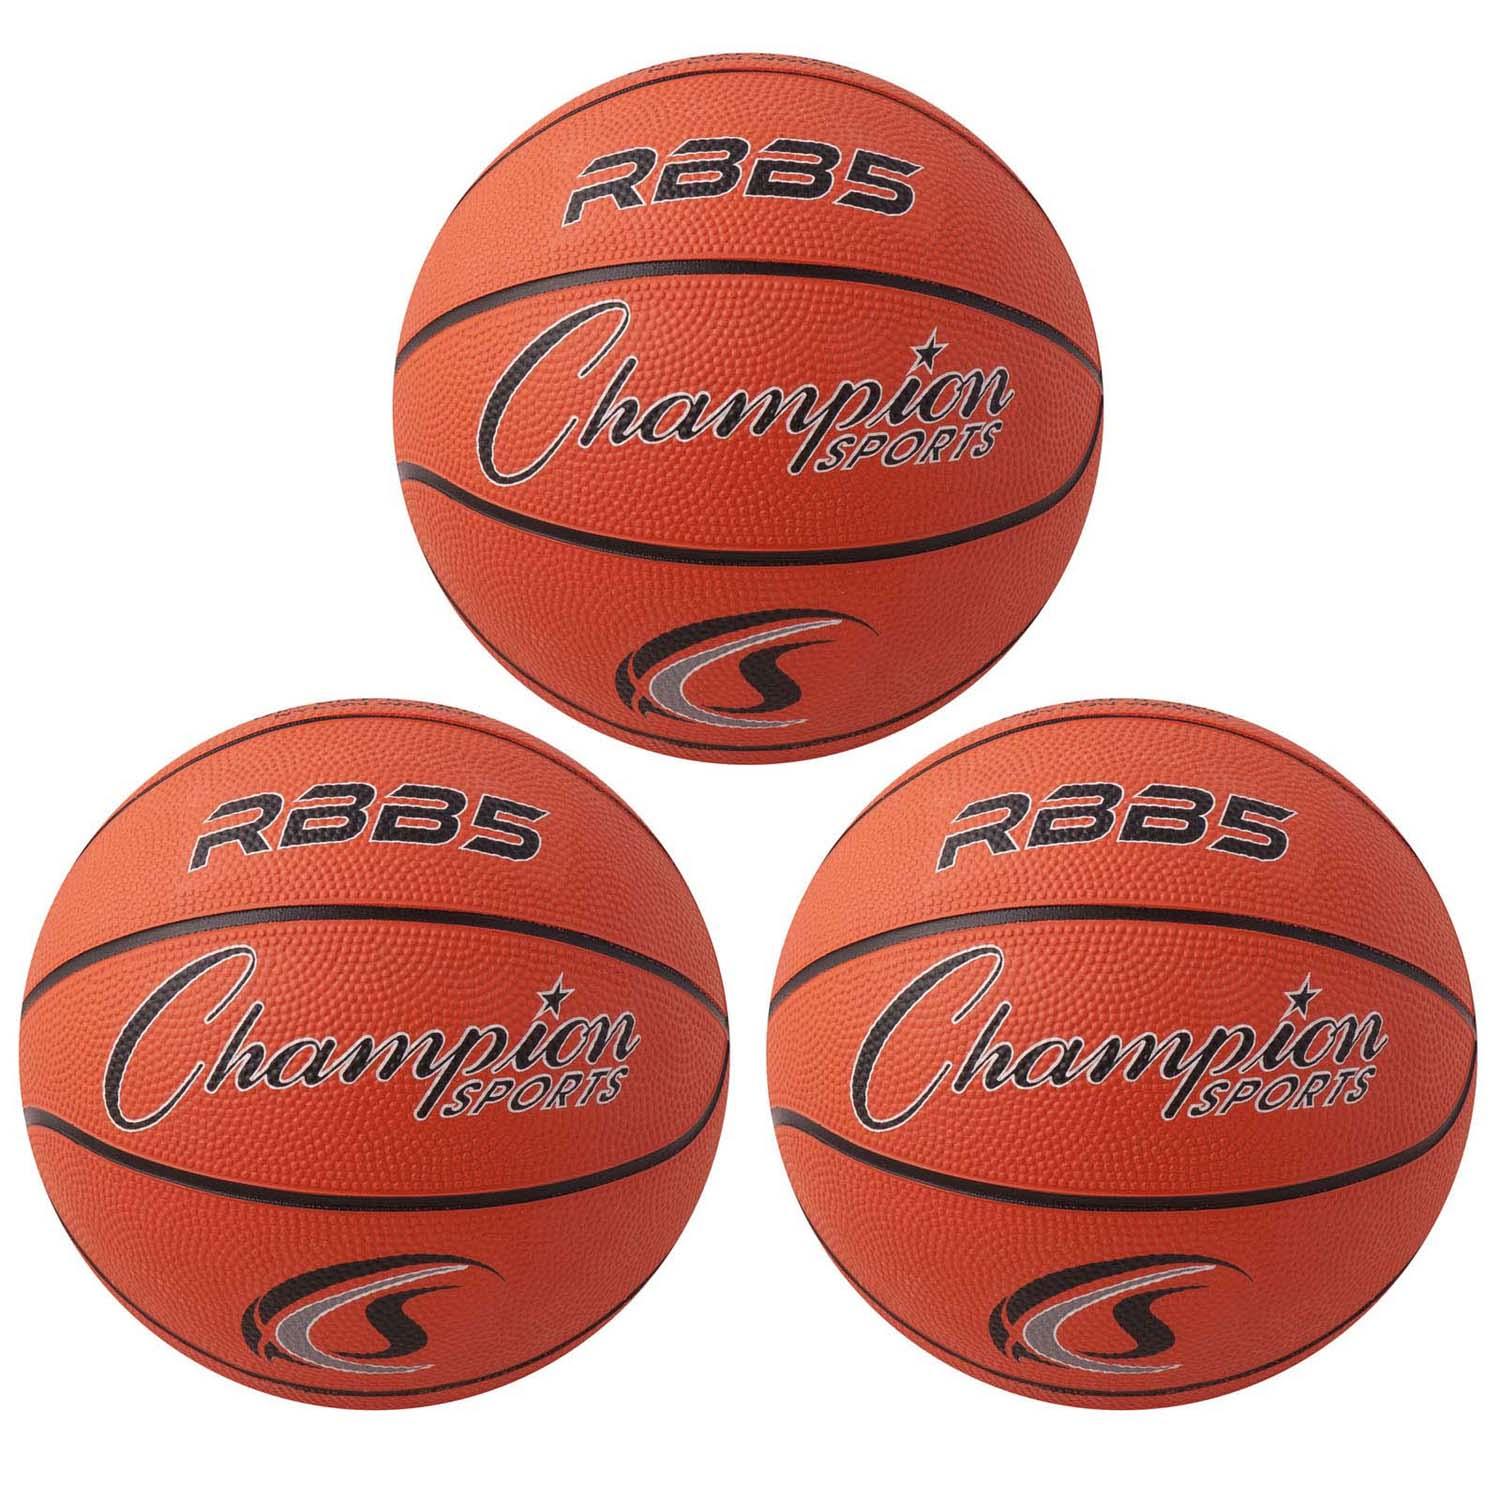 Mini Rubber Basketball, Orange, Pack of 3 - Loomini